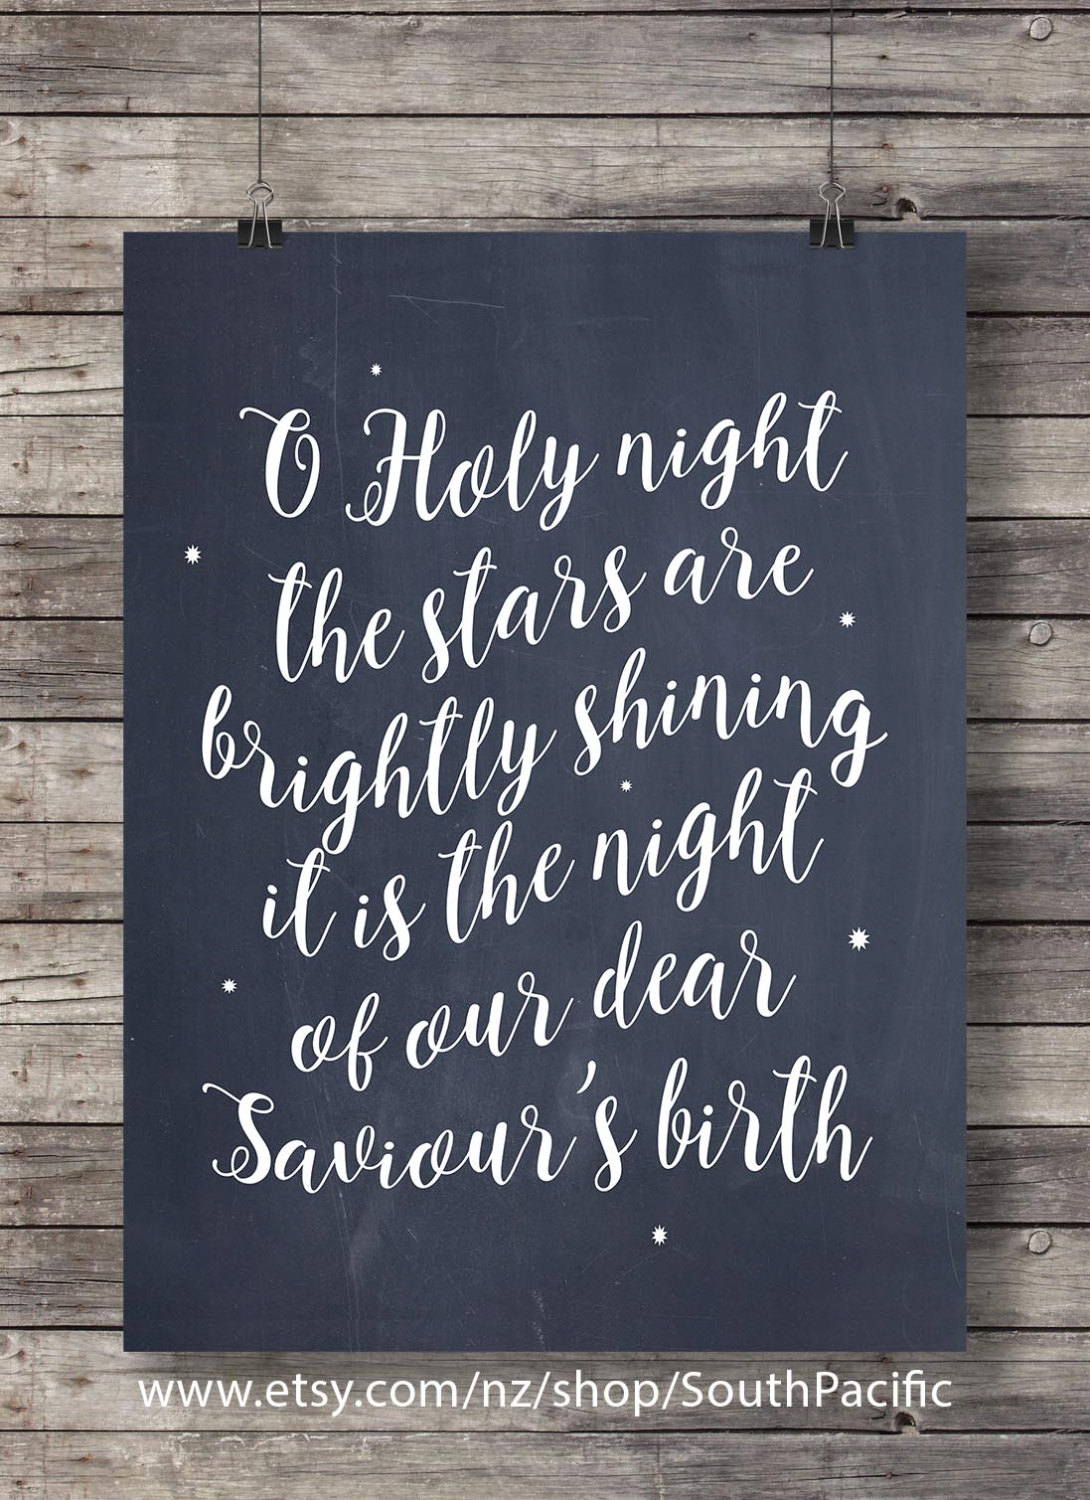 O Holy night the stars are brightly shining carol lyrics